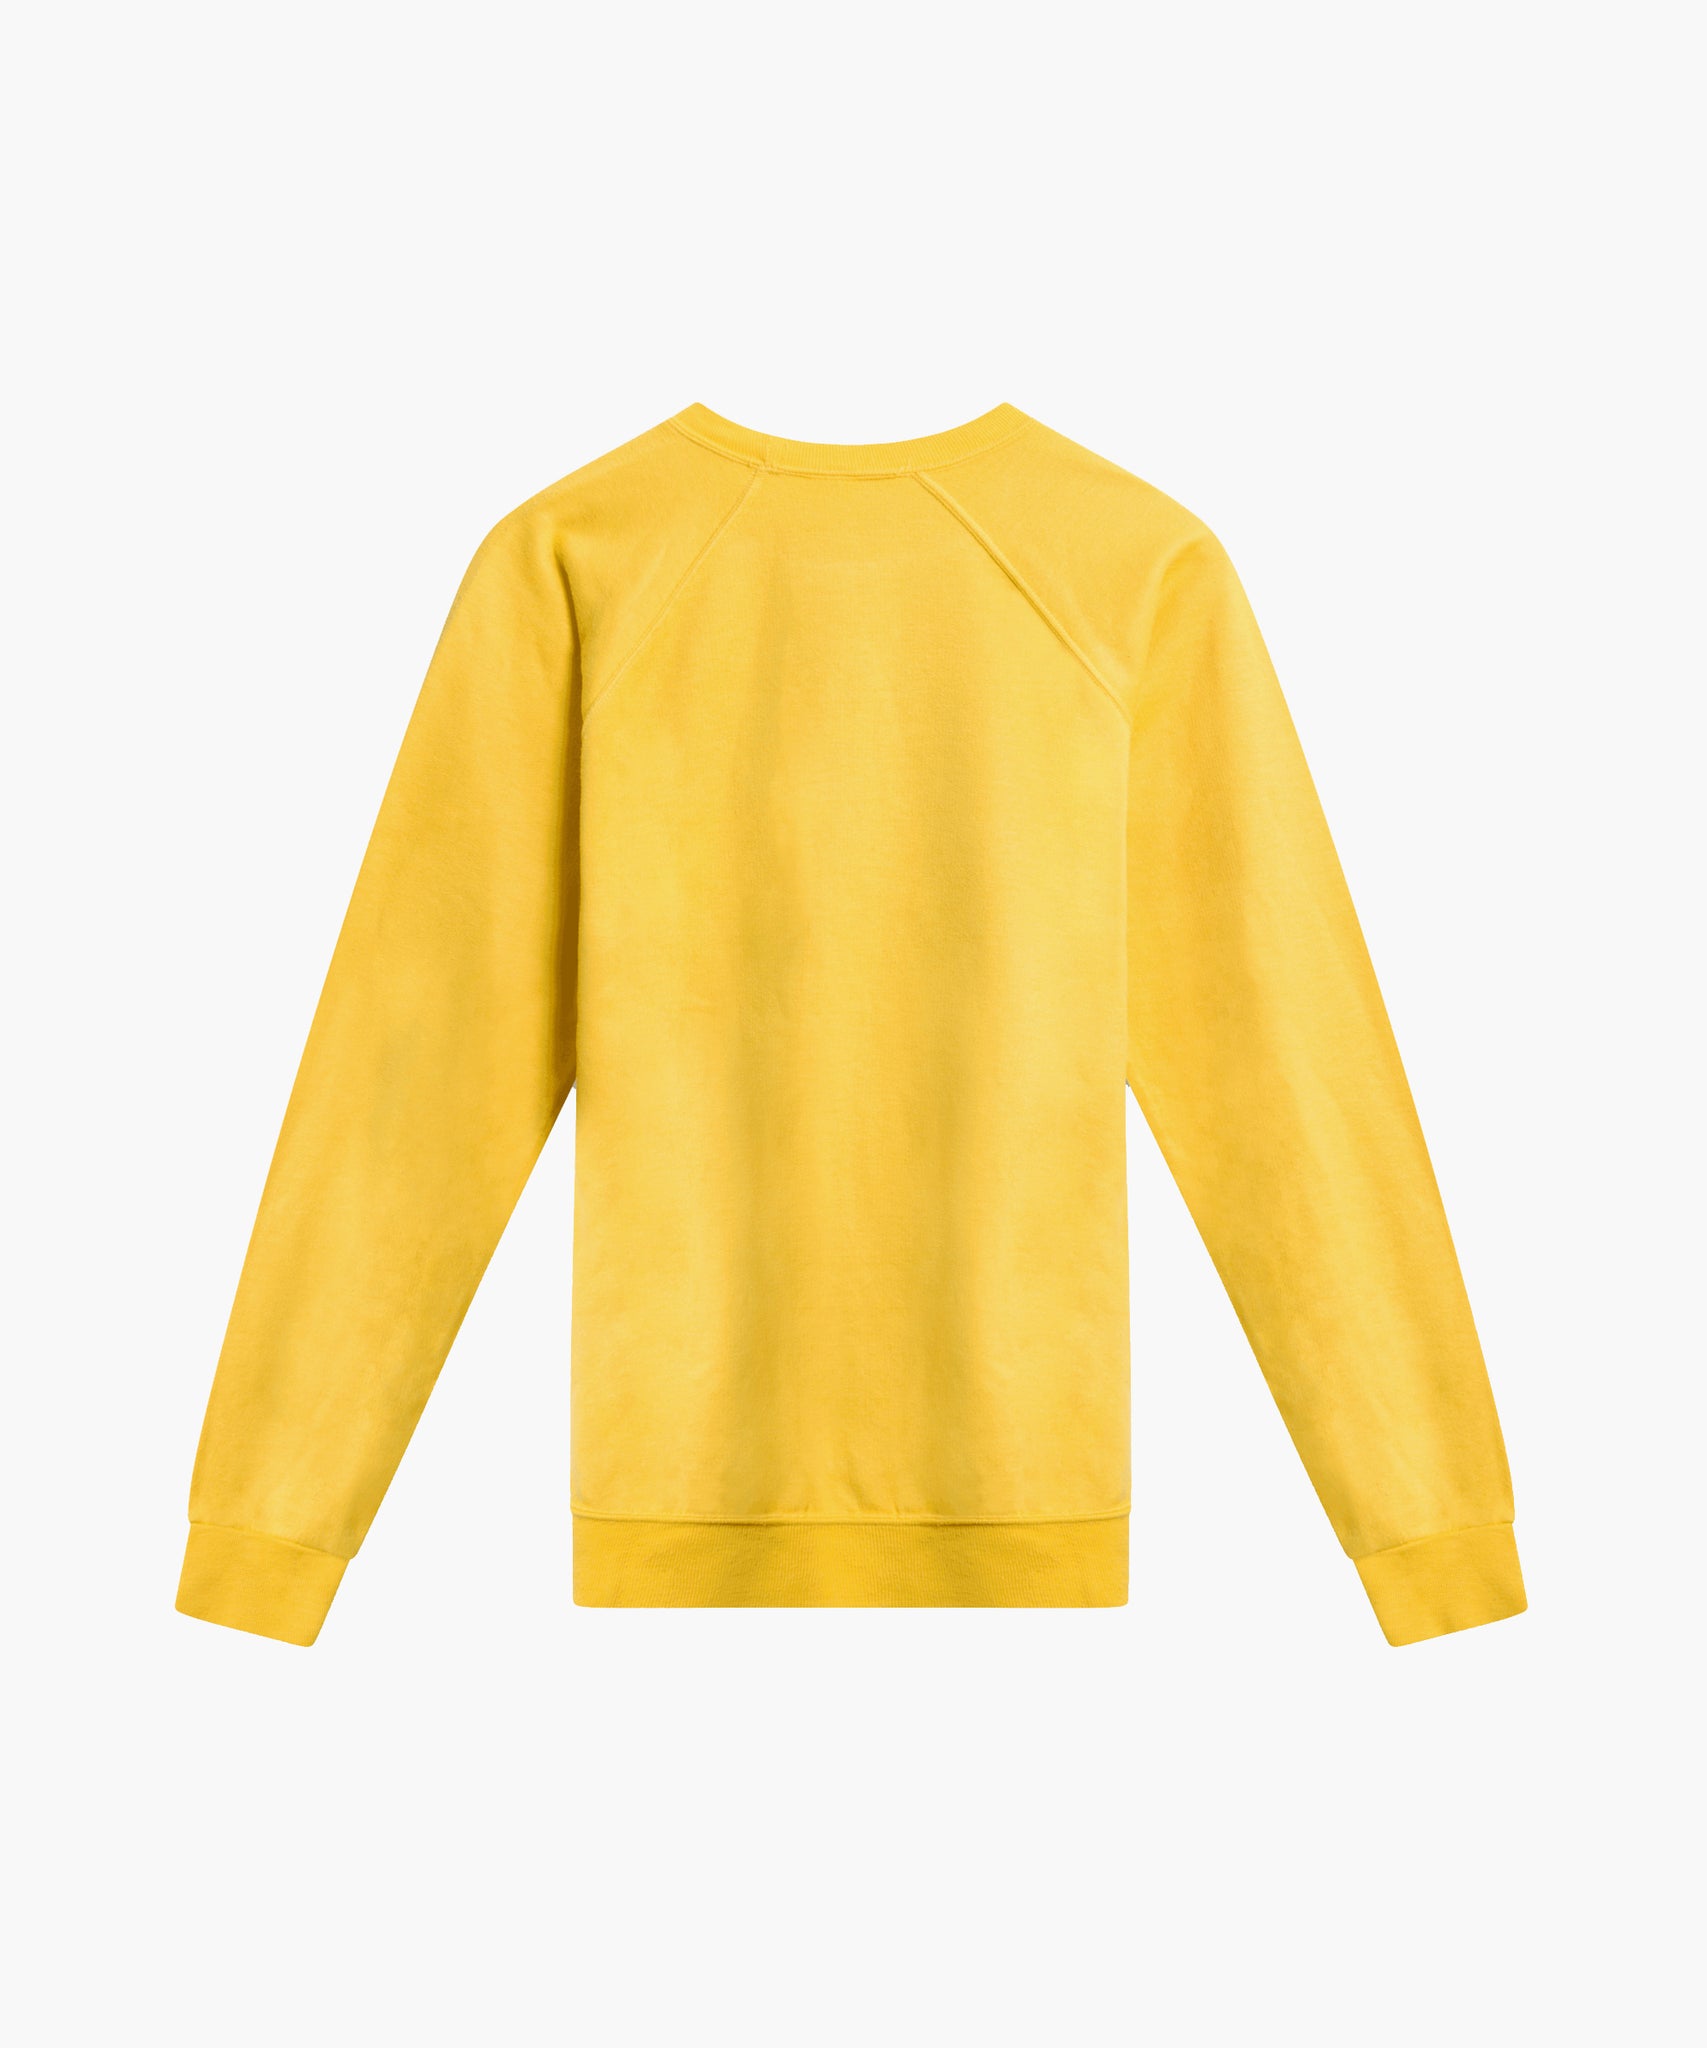 Vintage IKEA Sweatshirt "Made In Italy" 80s - Yellow